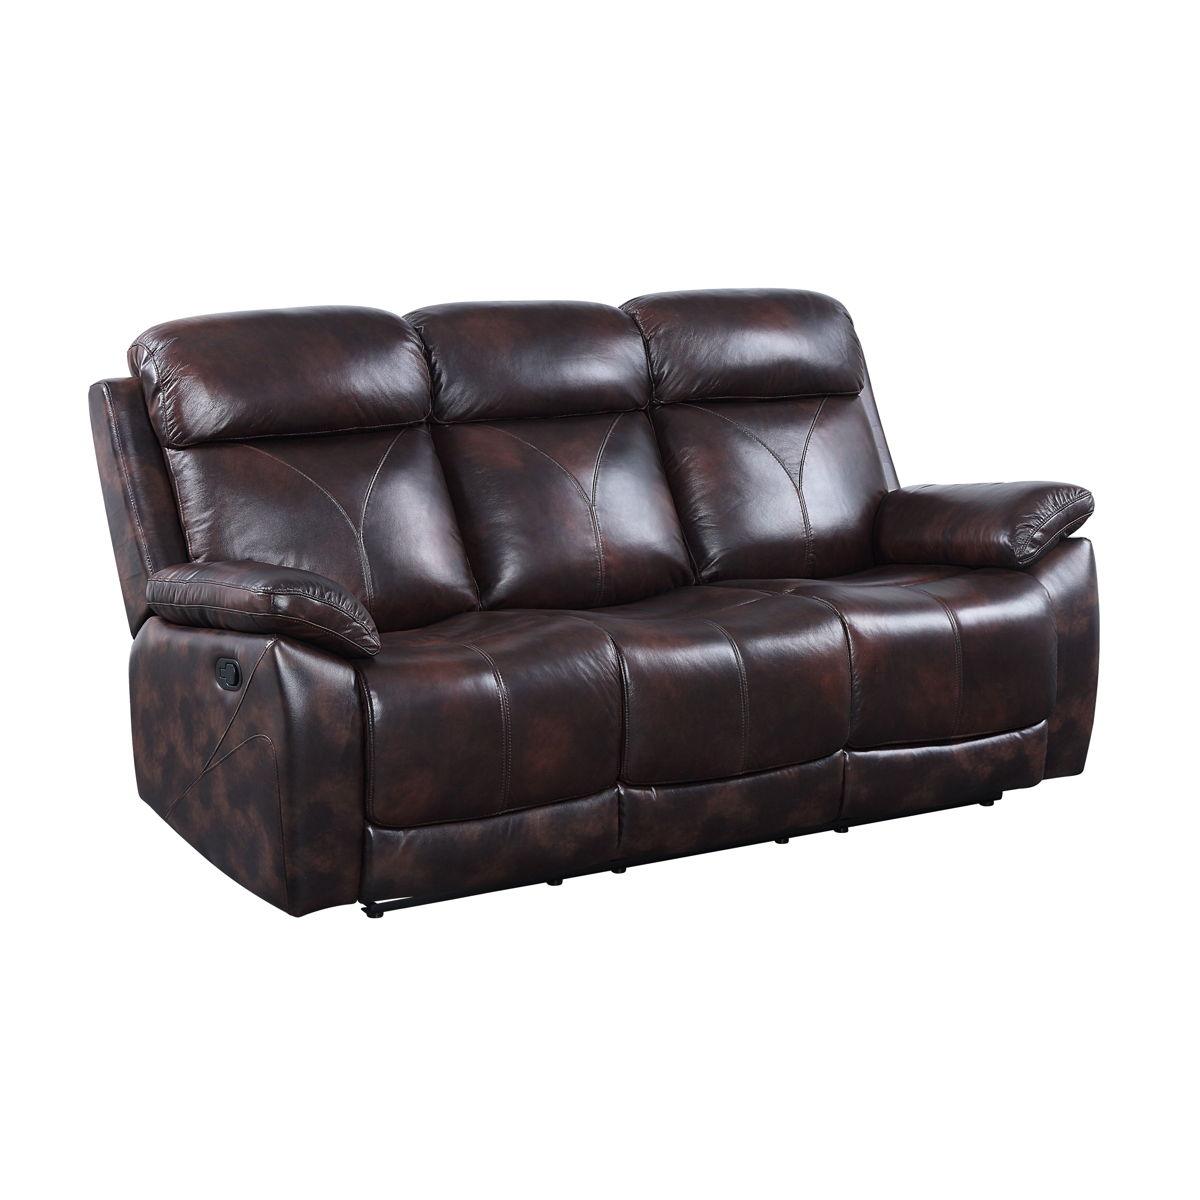 ACME - Perfiel - Sofa - 2 Tone Dark Brown Top Grain Leather - 5th Avenue Furniture